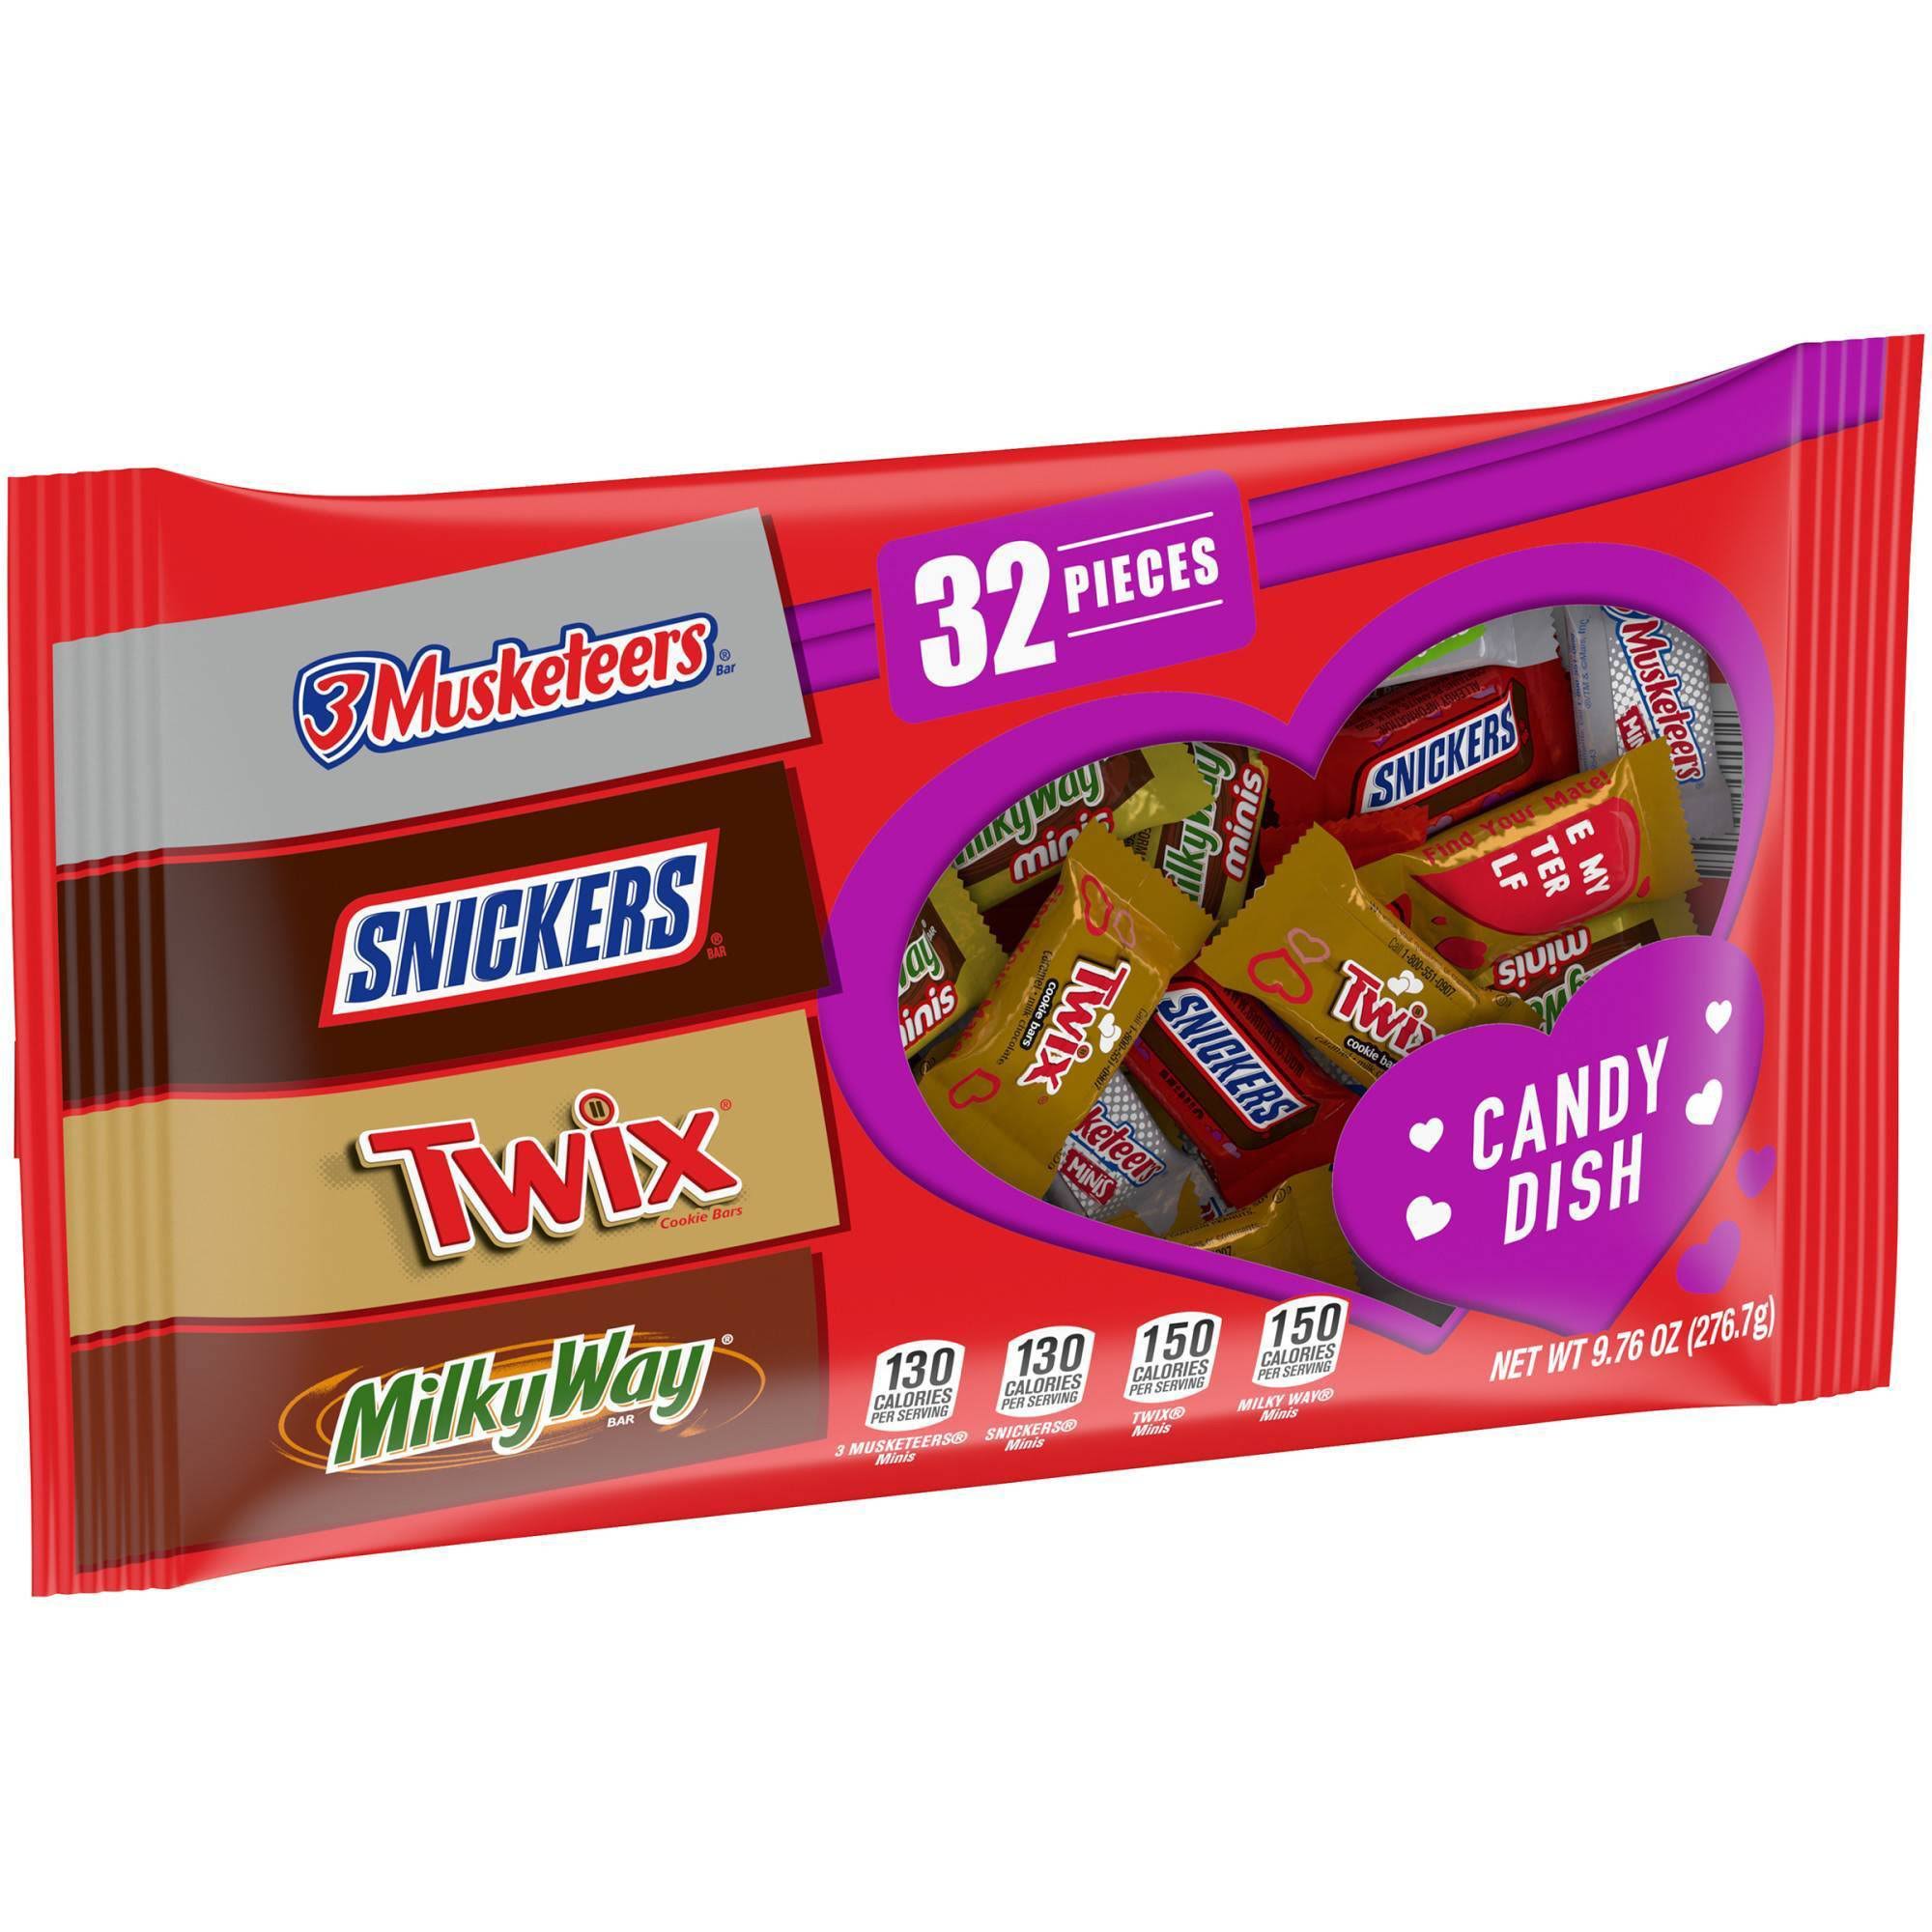 Mars Wrigley Candy Dish - 32 pieces, 9.76 oz